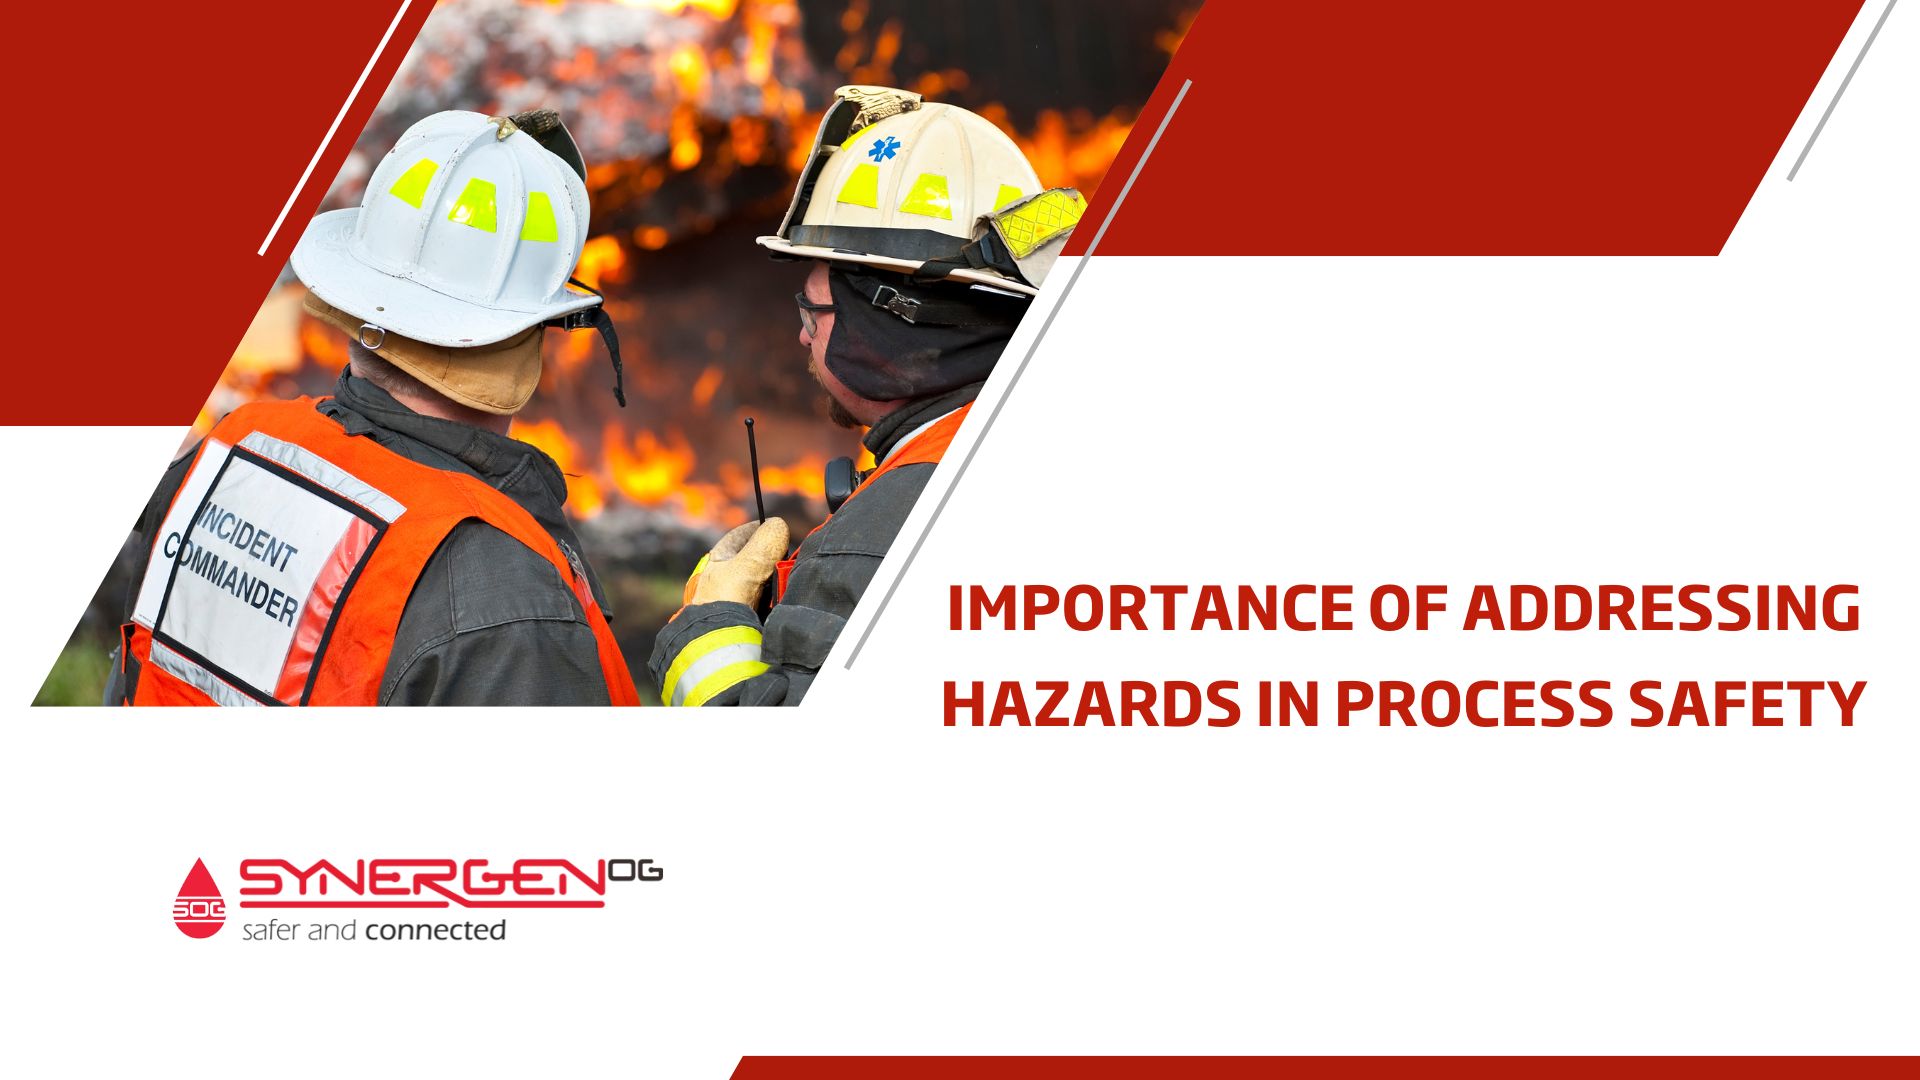 process safety hazards importance